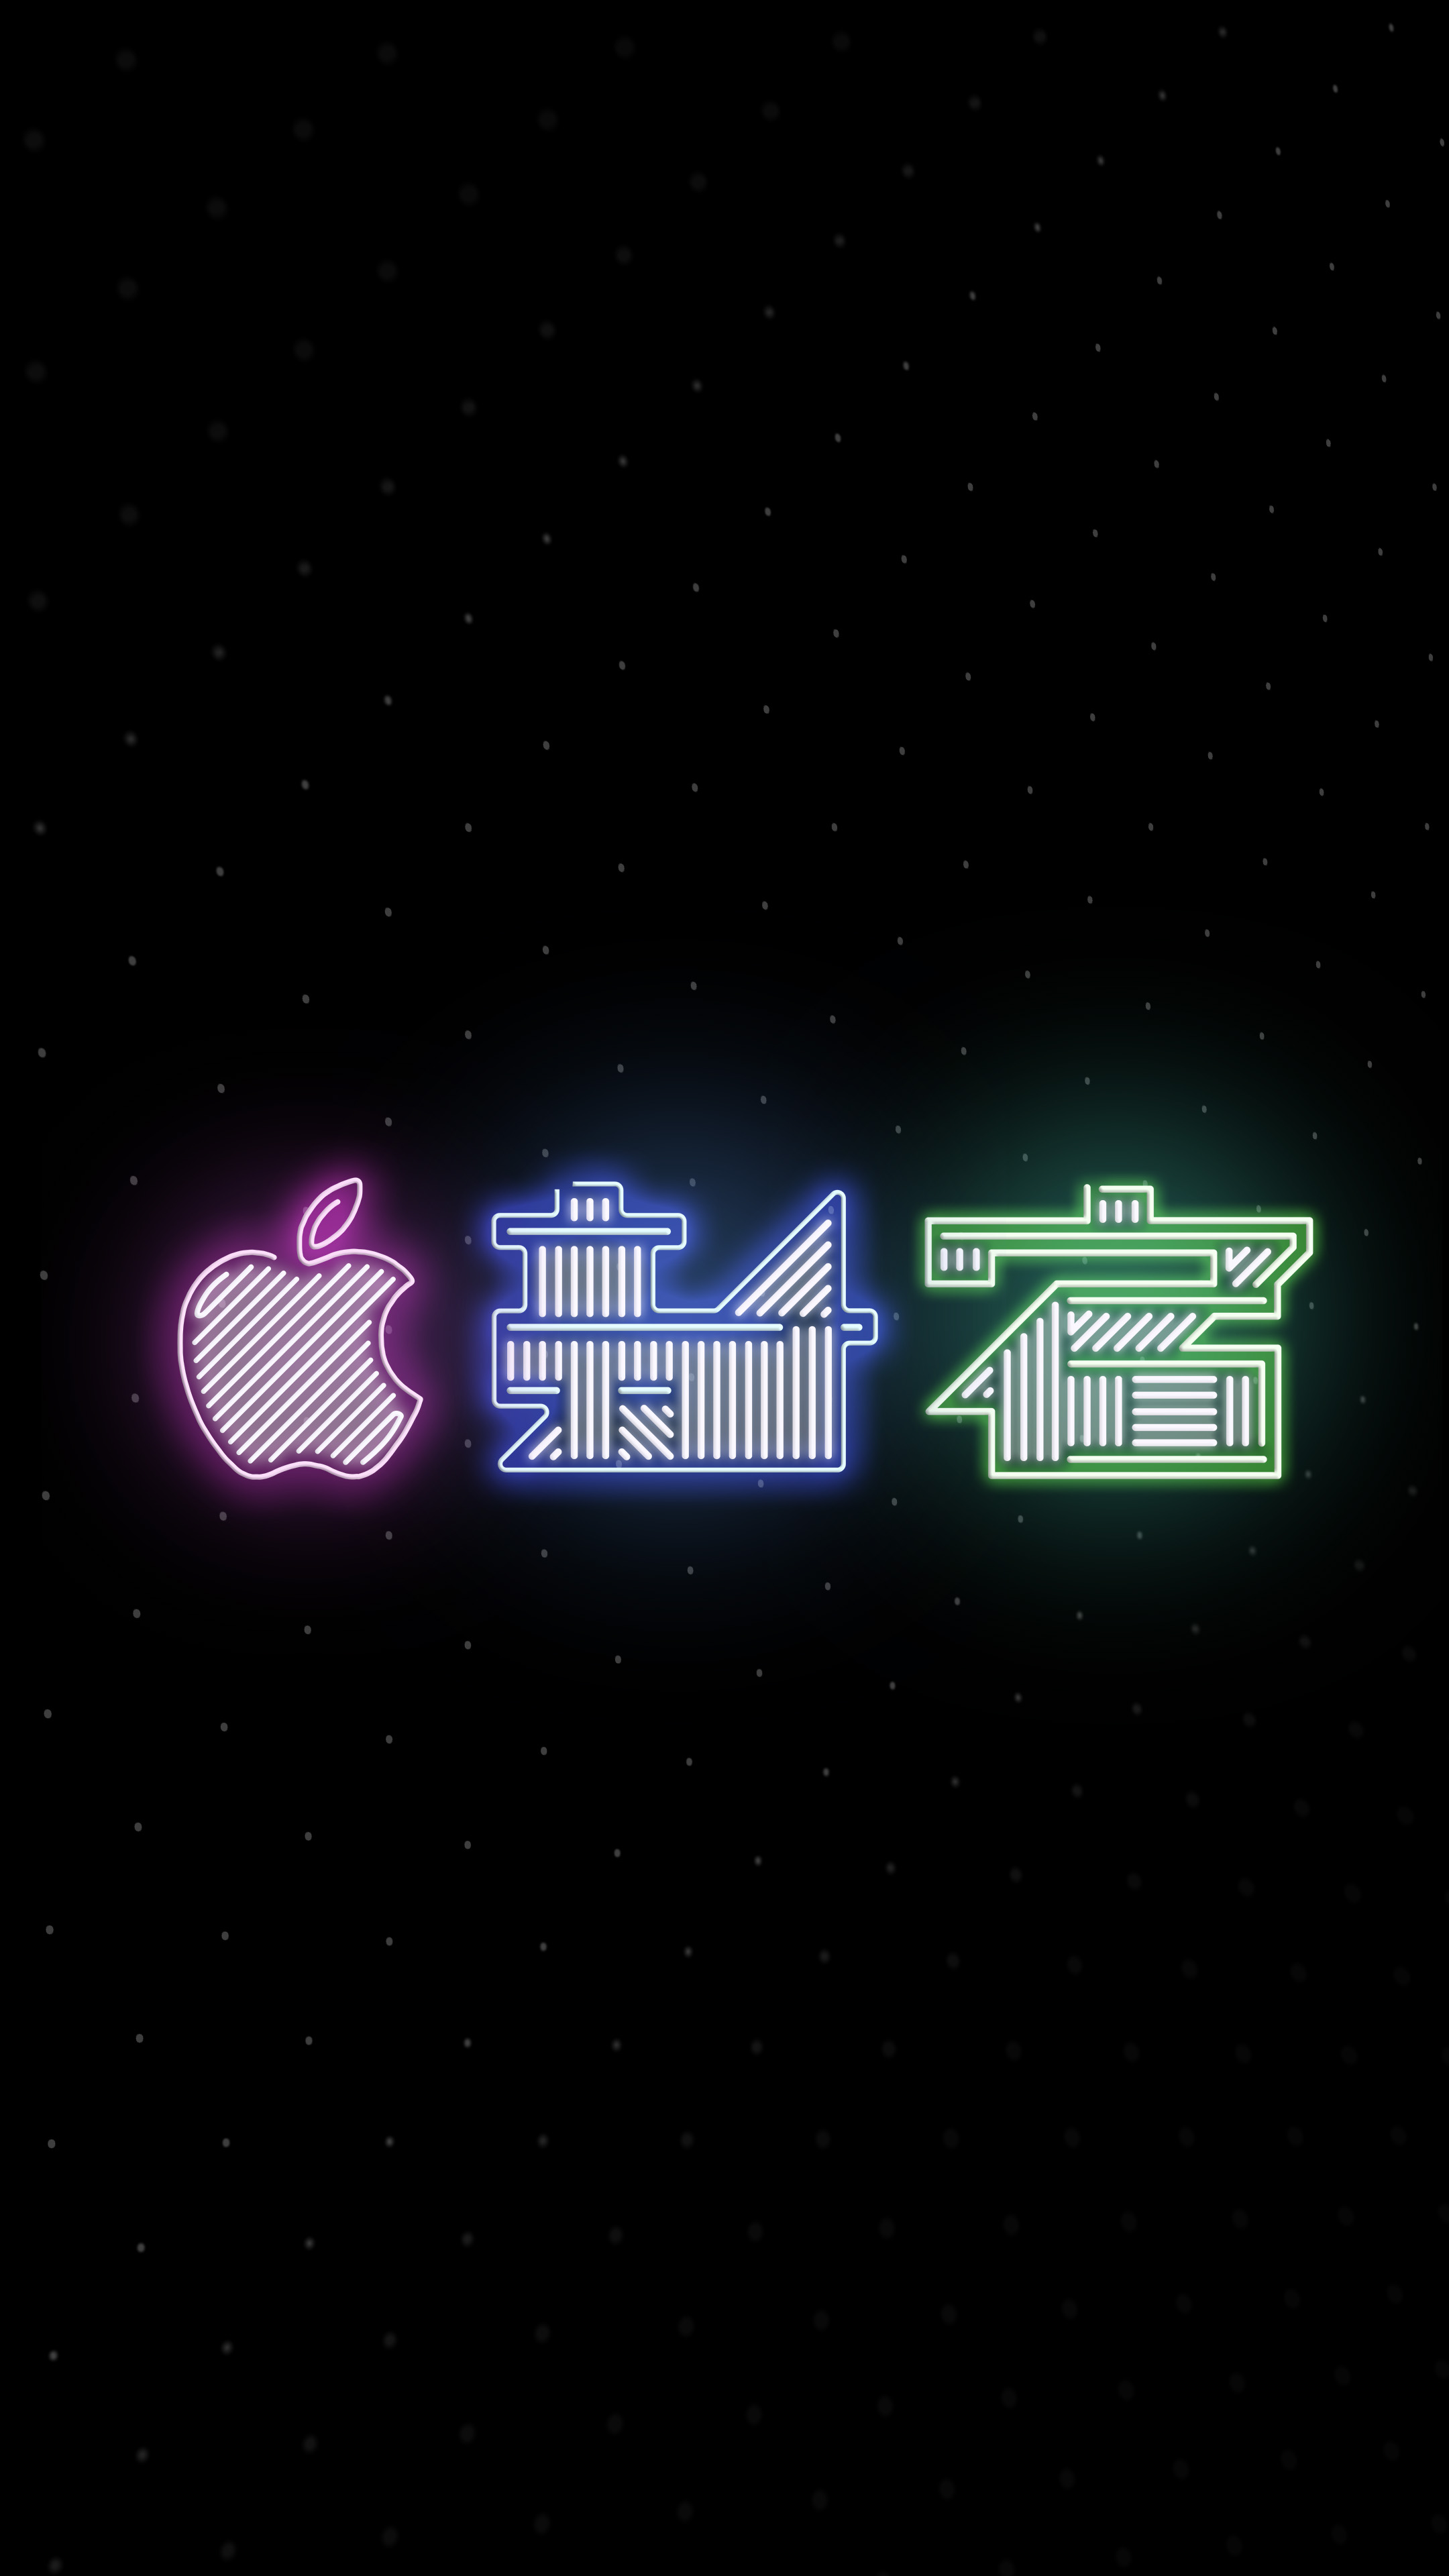 Apple 新宿 のロゴをあしらった壁紙が公開 Iphone Ipad Macに対応 Corriente Top